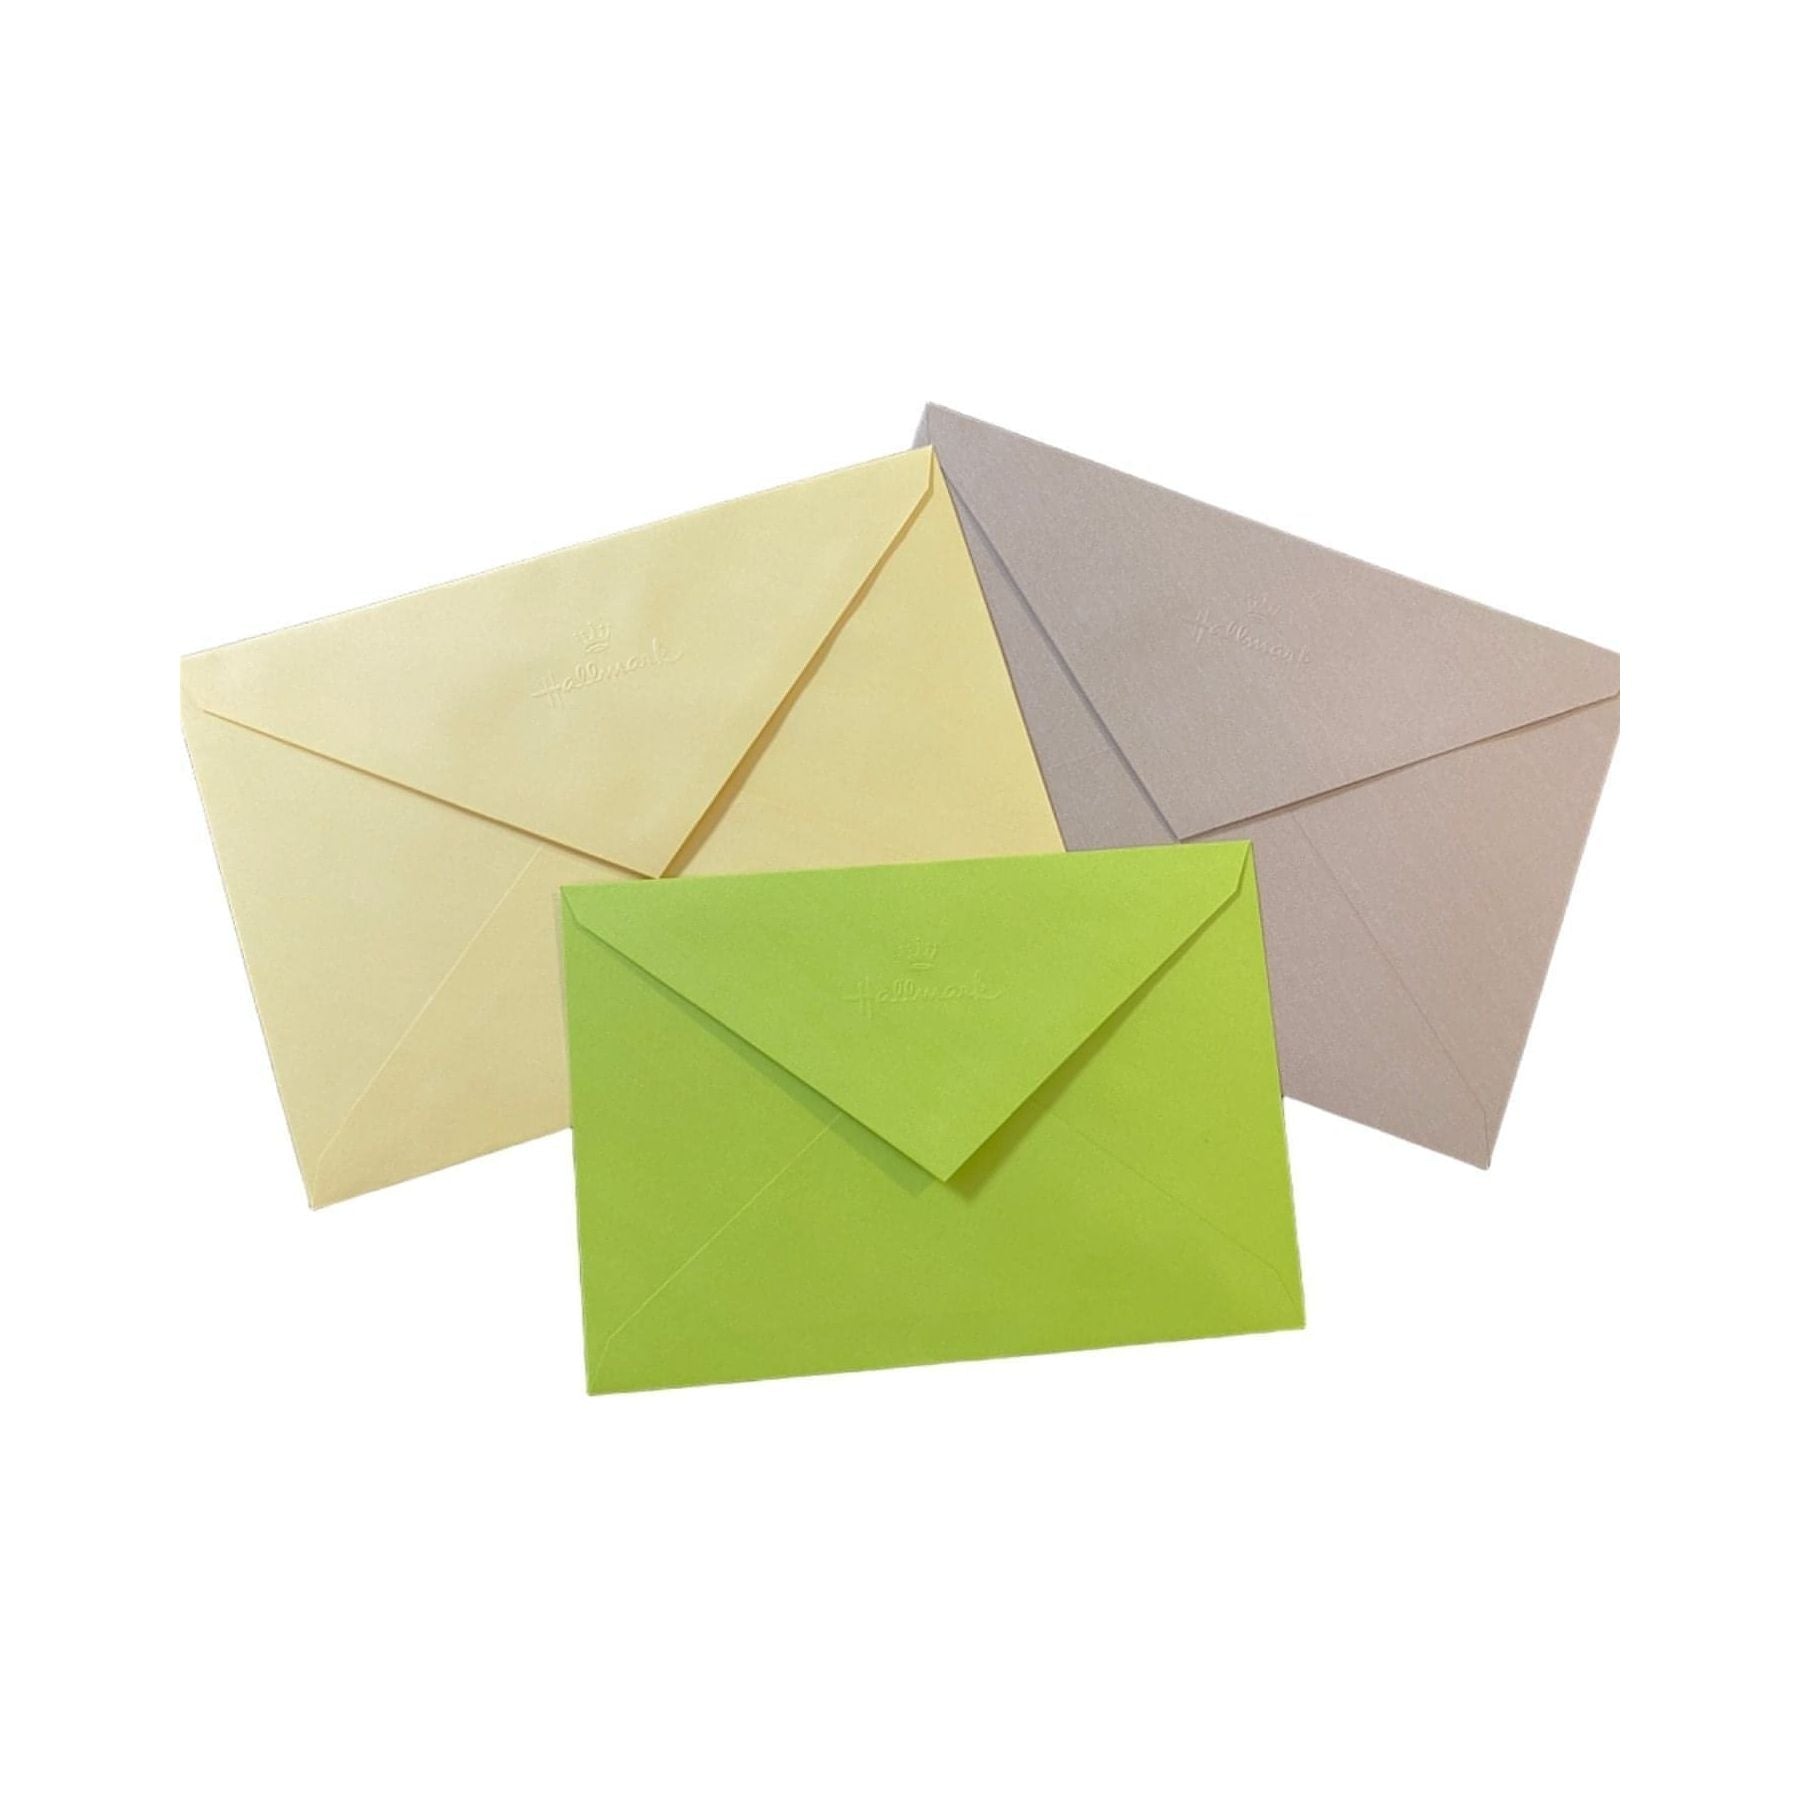 Hallmark-Birthday Card with Envelope - Heartline by Hallmark - "Cancel Subscription!" - Brandat Outlet